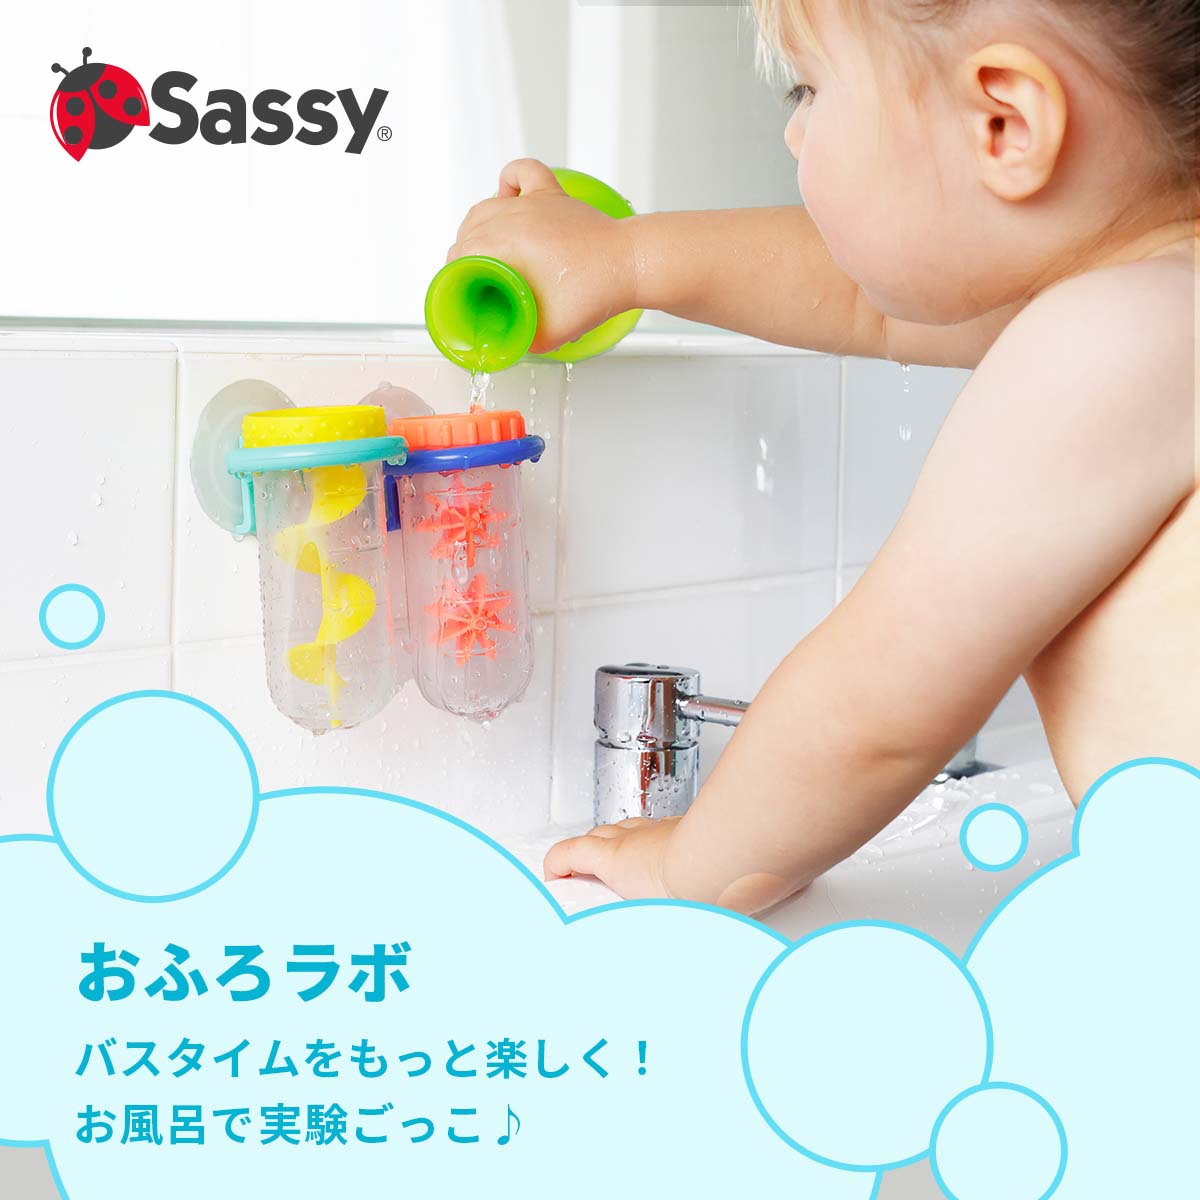 【NEW】Sassy サッシー おふろラボ | おもちゃ お風呂 バスタイム